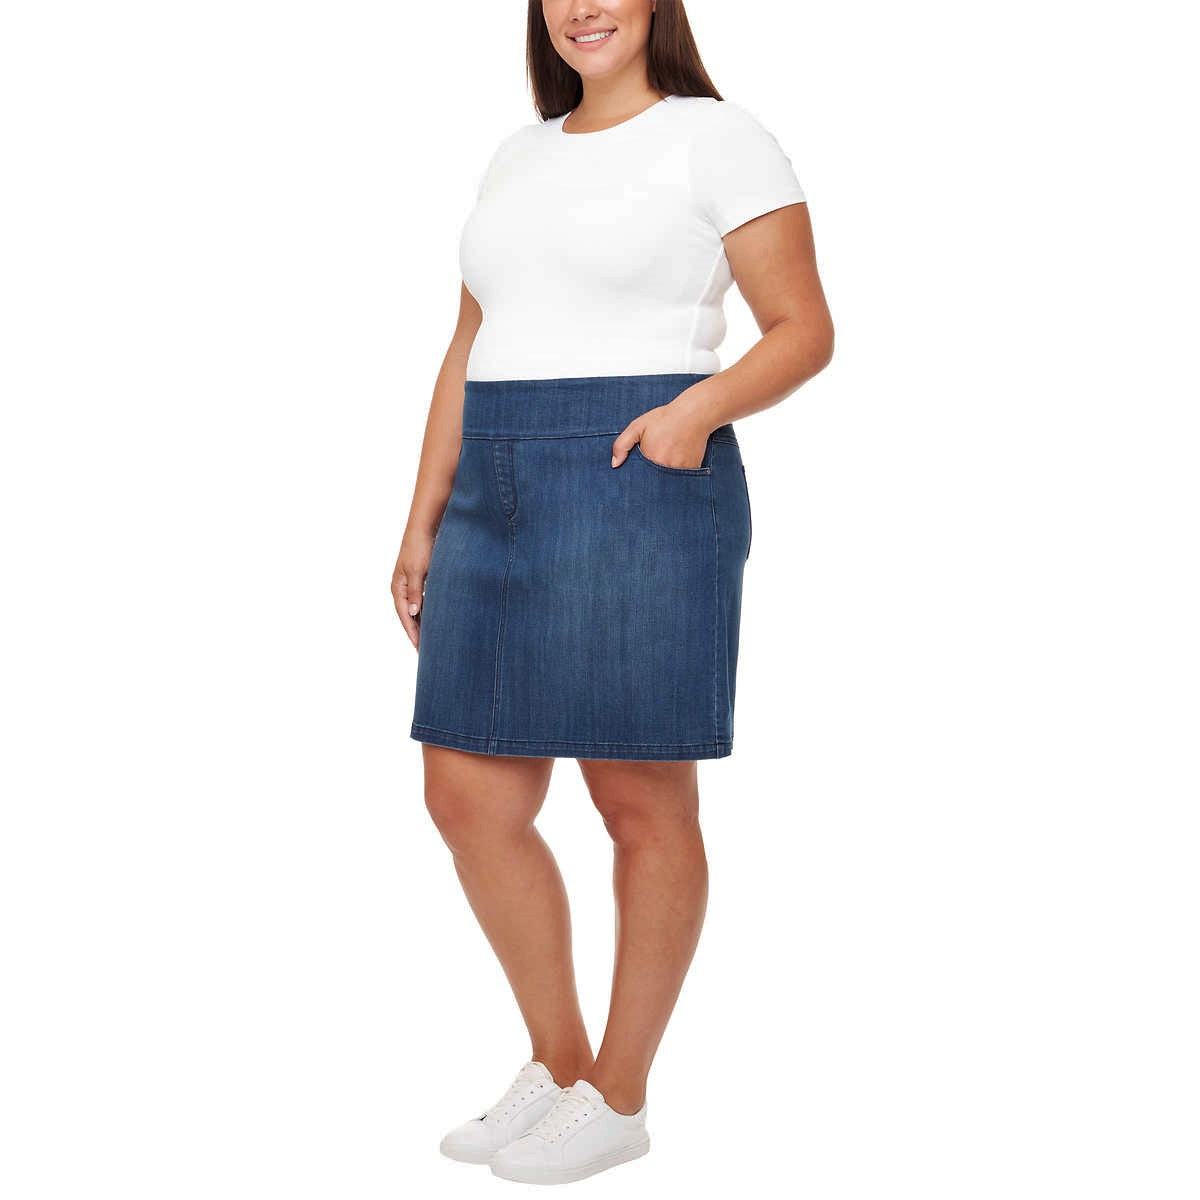 S.C. & CO Women's Built-in Shorts 5 Pockets Stretch Denim Skort